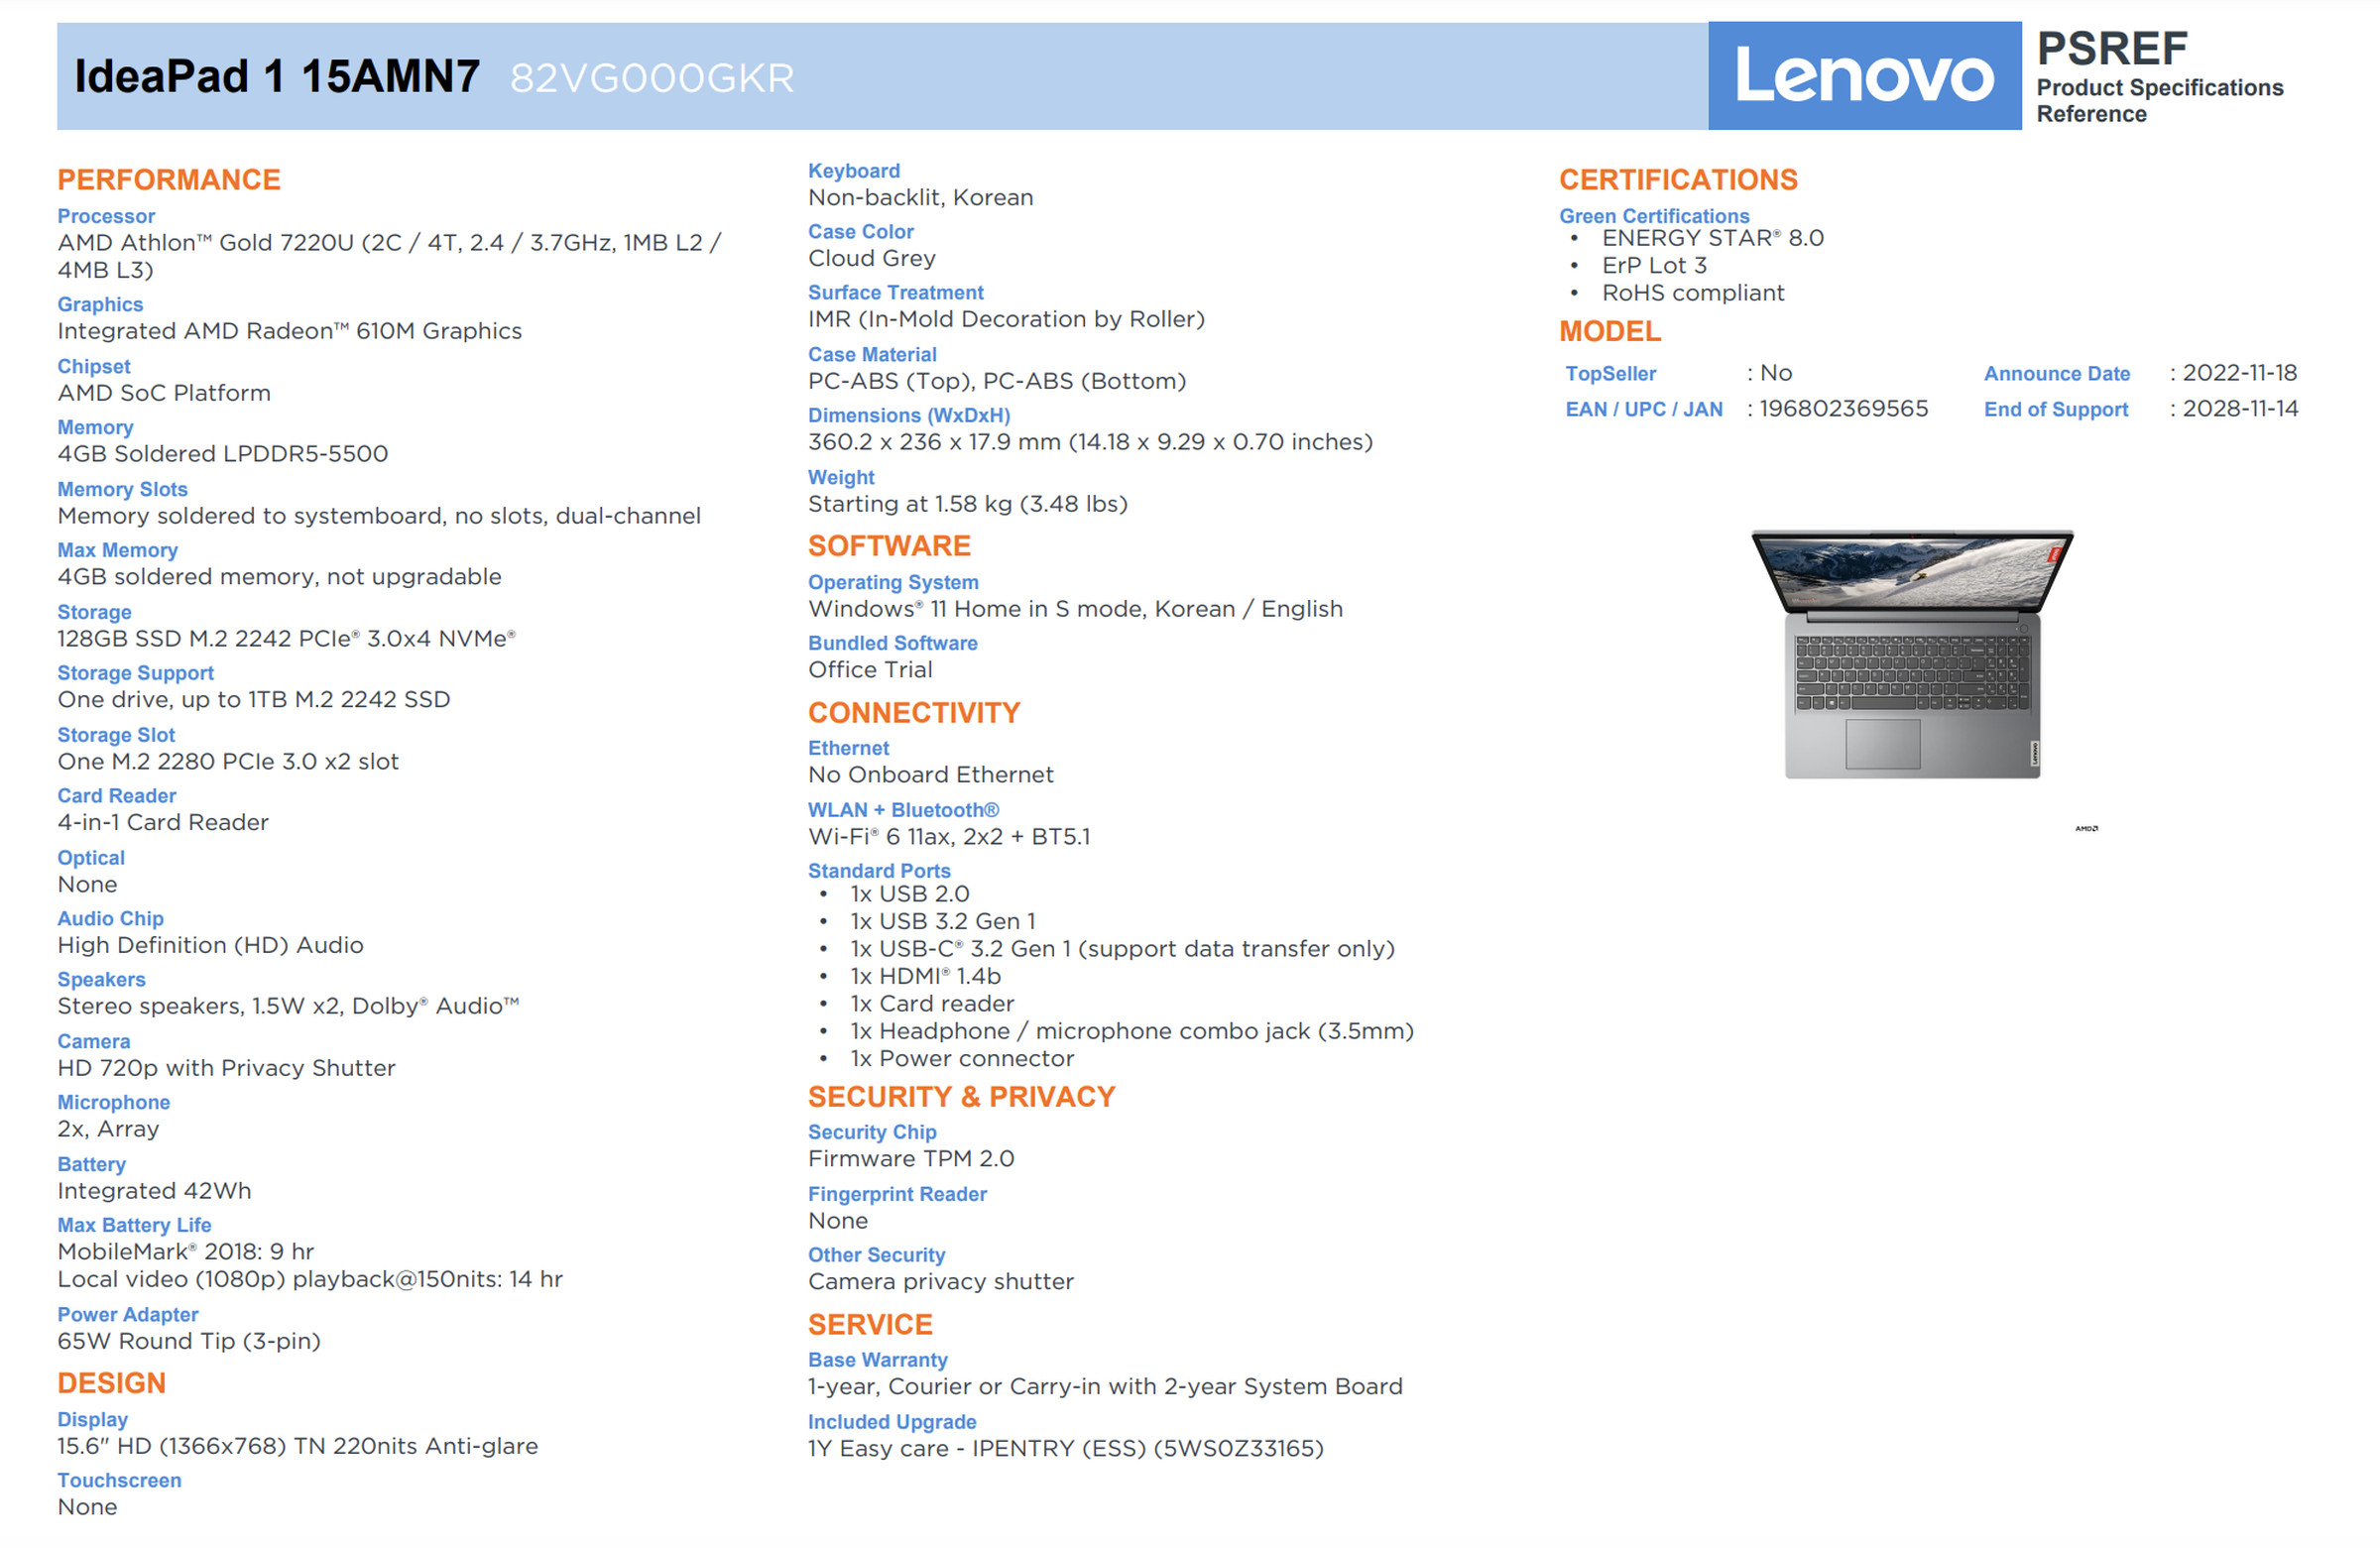 A screenshot of a PDF of an IdeaPad 1 showing an Athlon Gold 7220U processor.